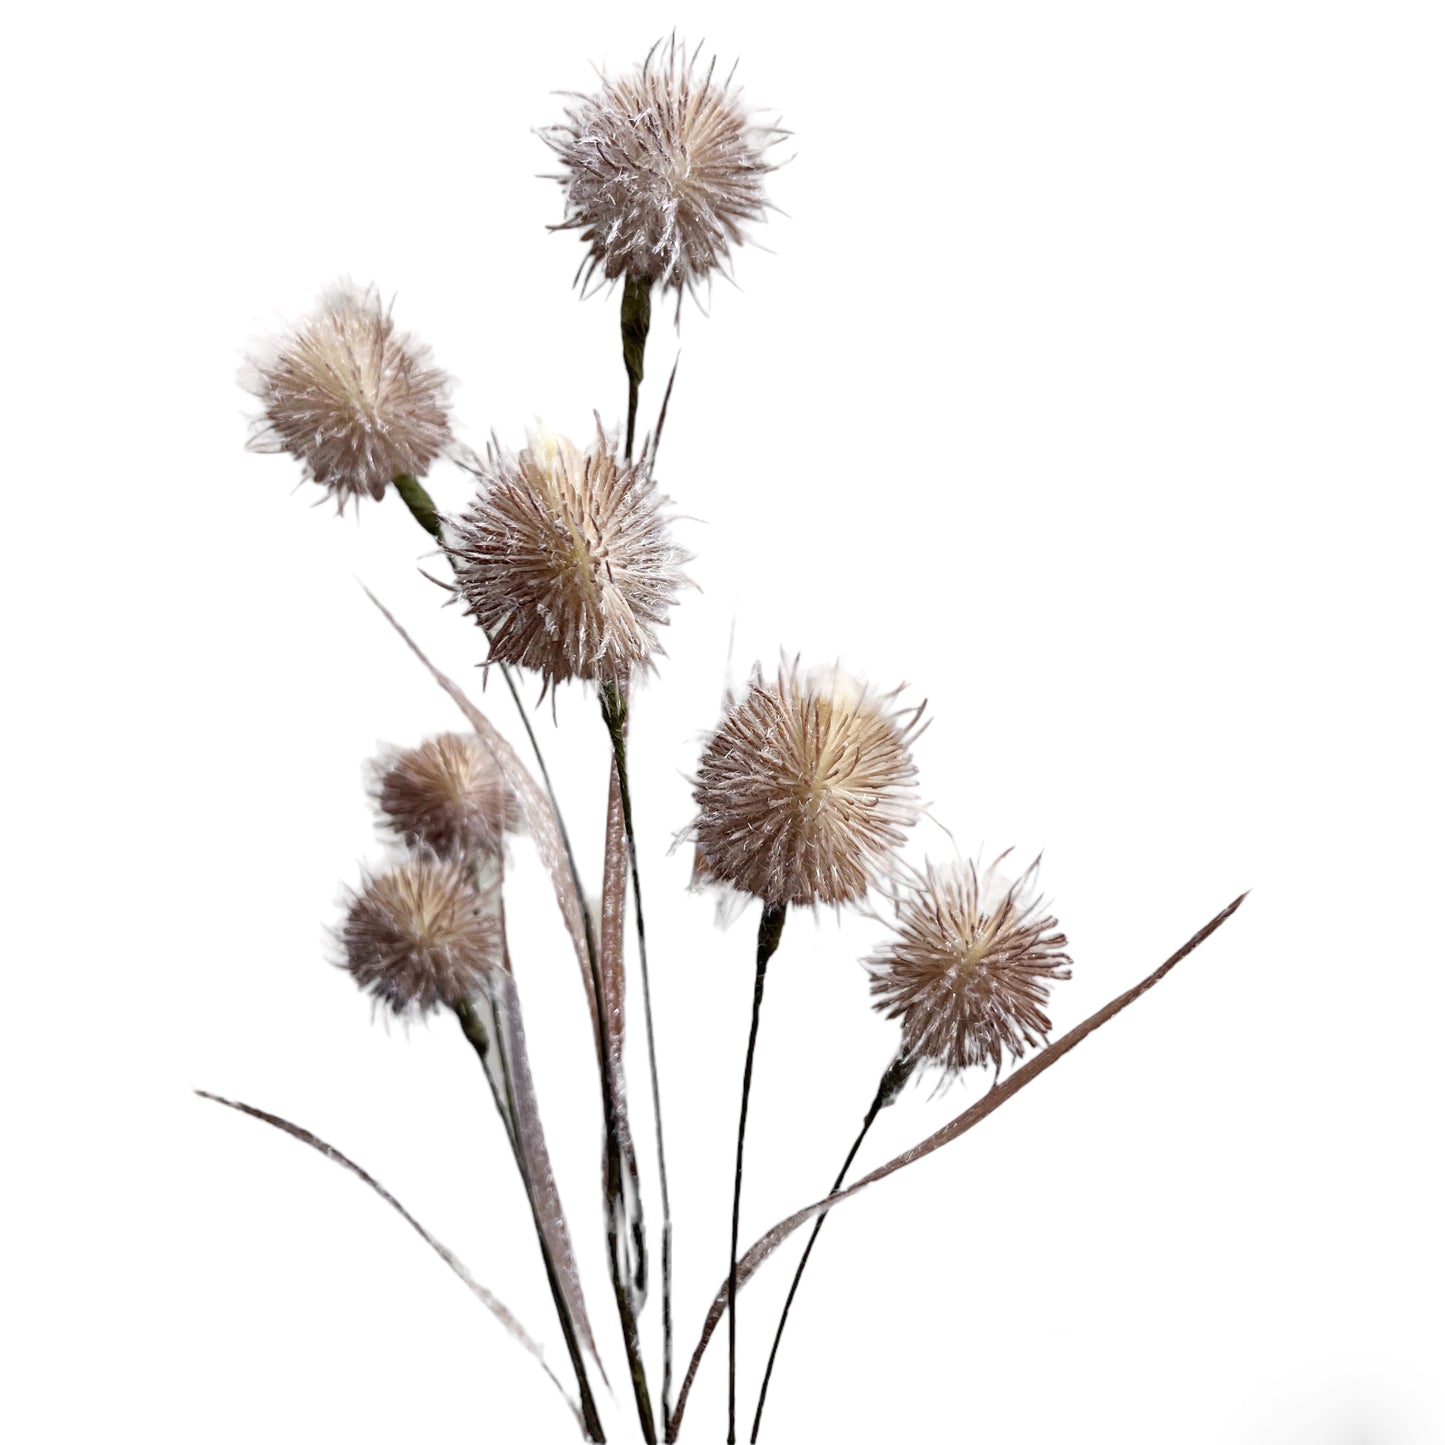 Set of 3 Long-Stemmed Artificial Dandelion Flowers